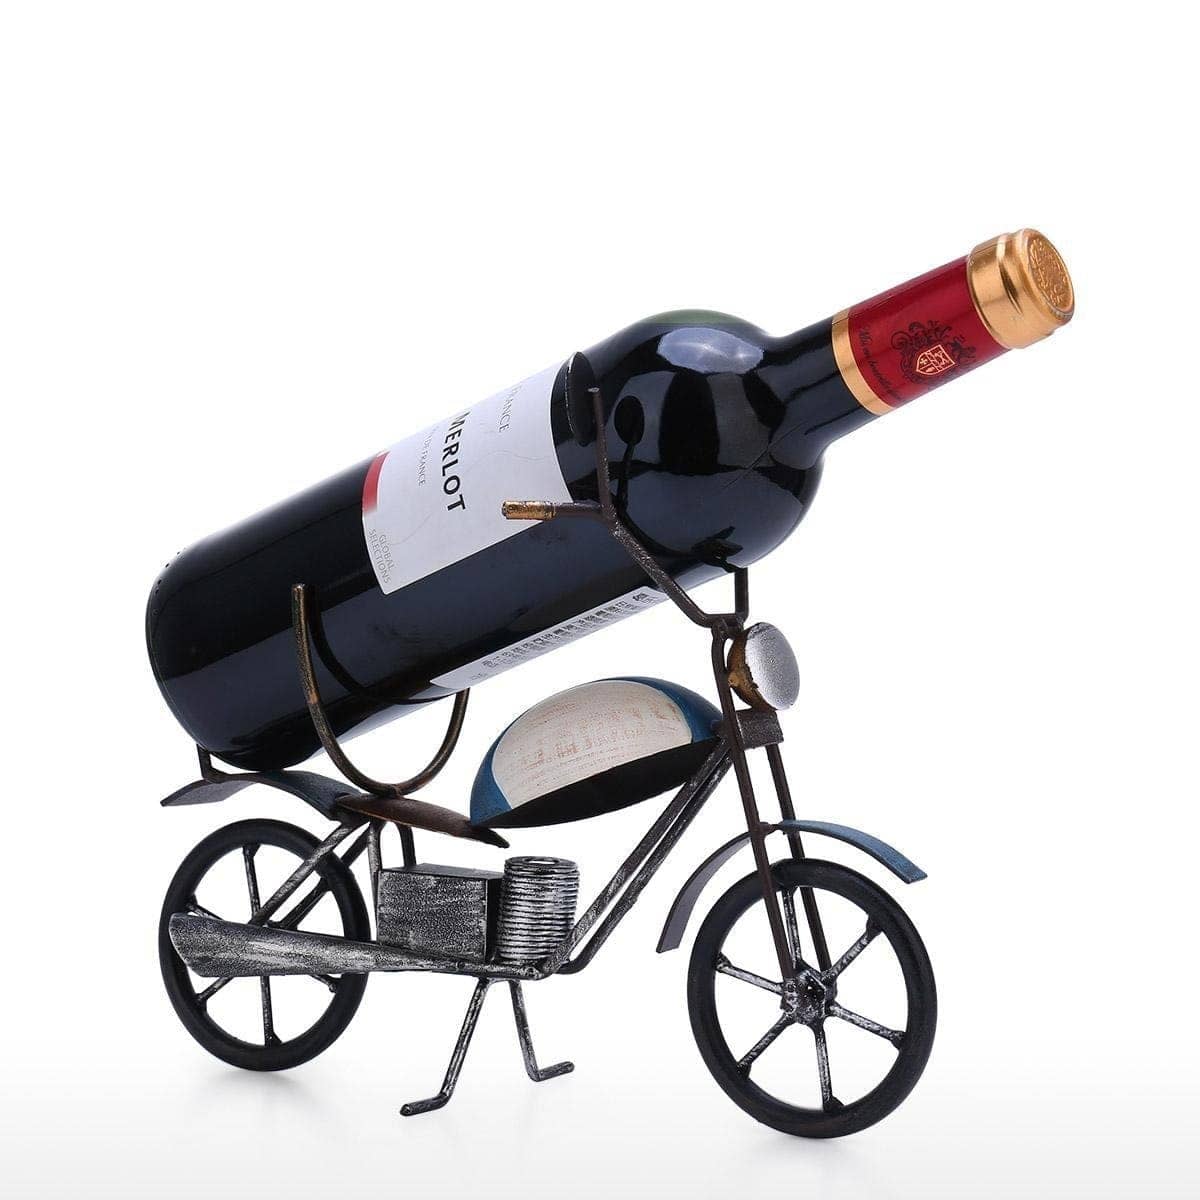 Motorcycle Wine Bottle Holder - Cool Wine Storage